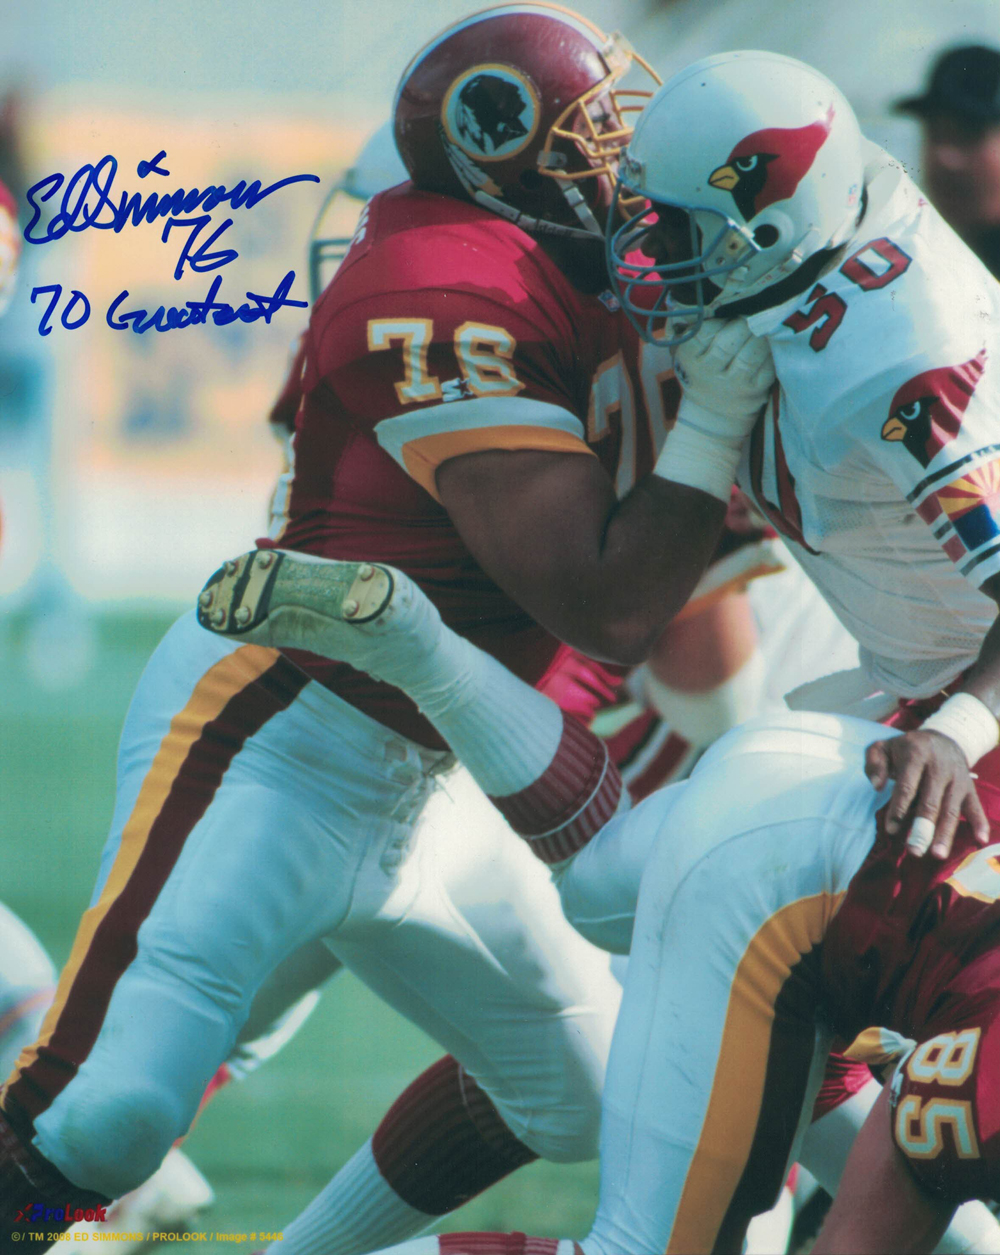 Ed Simmons Autographed Washington Redskins 8x10 Photo 70 Greatest 27923